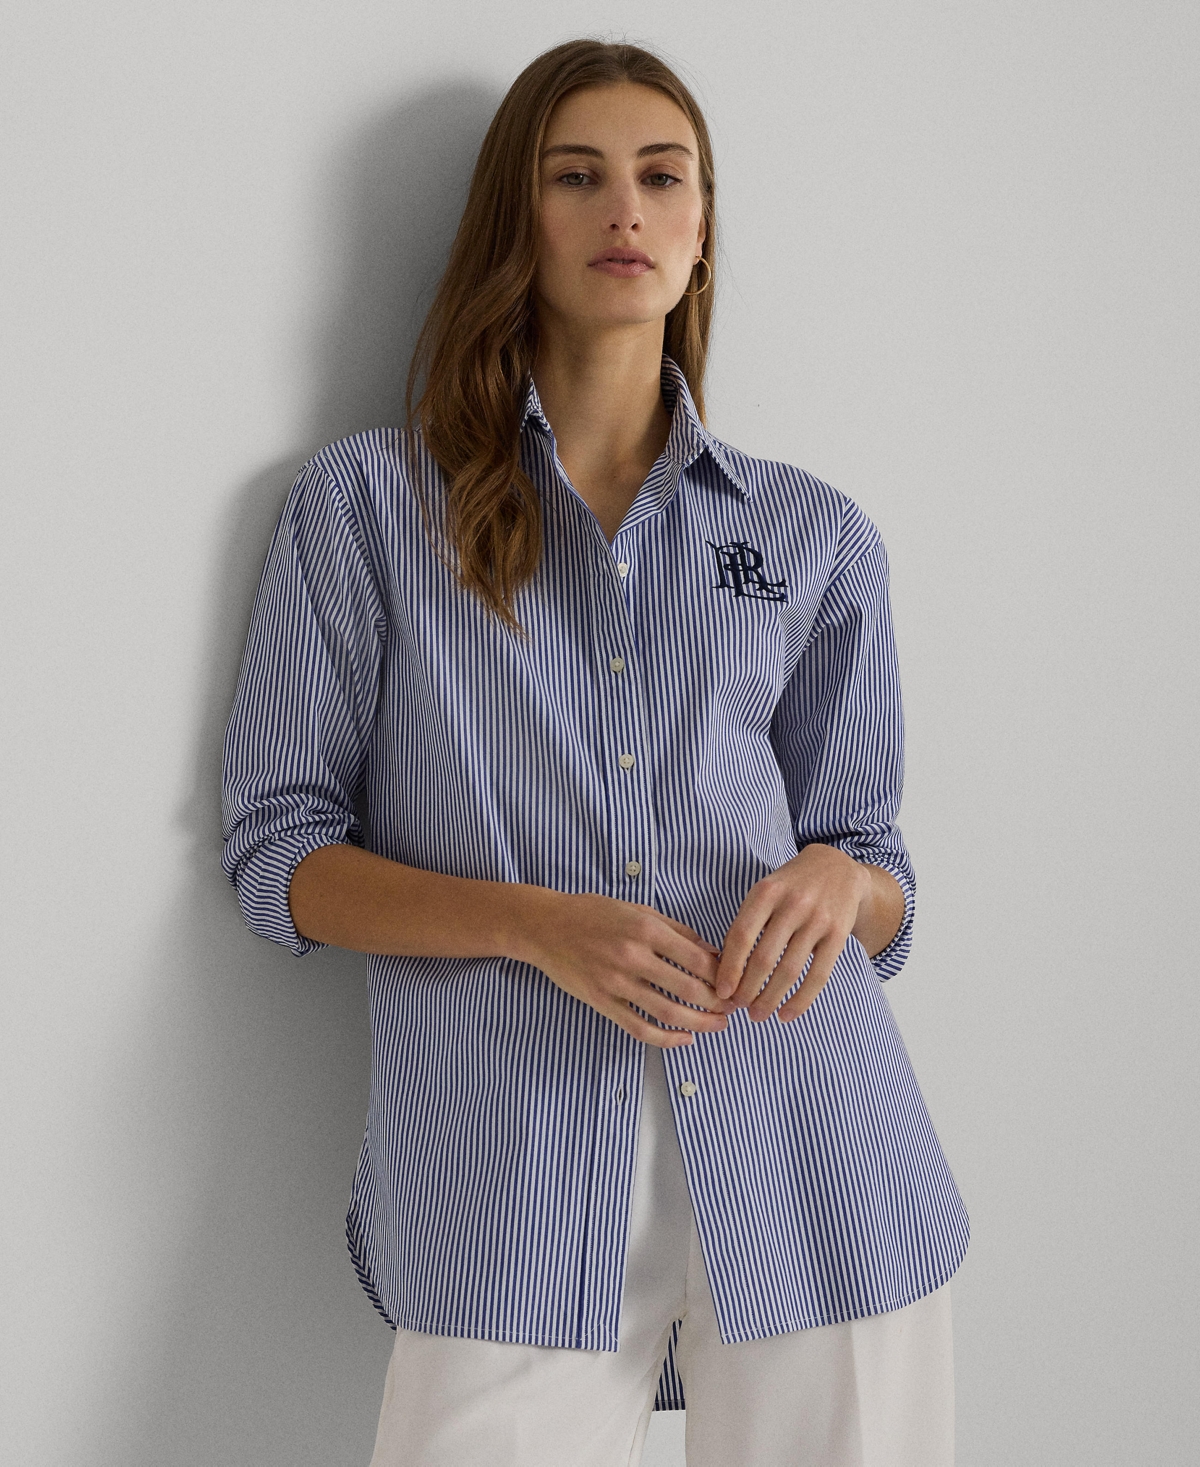 Women's Striped Long-Sleeve Shirt - Blu/wht